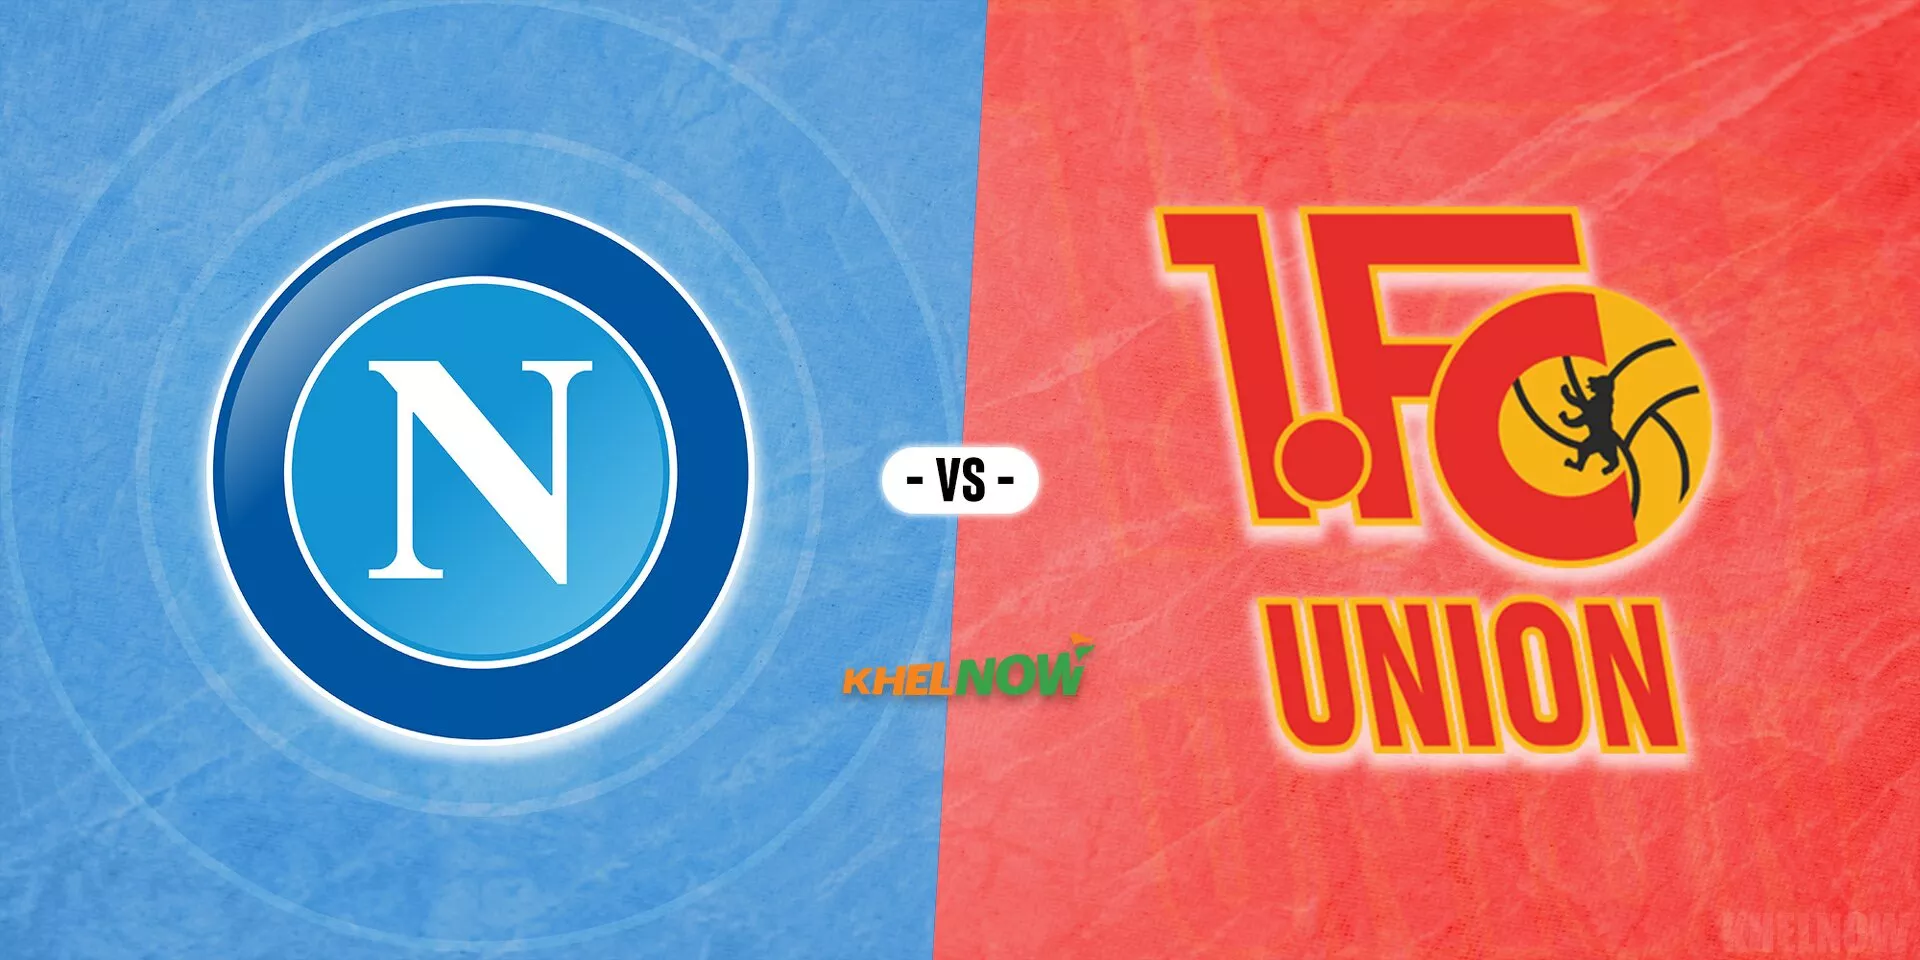 Napoli vs Union Berlin